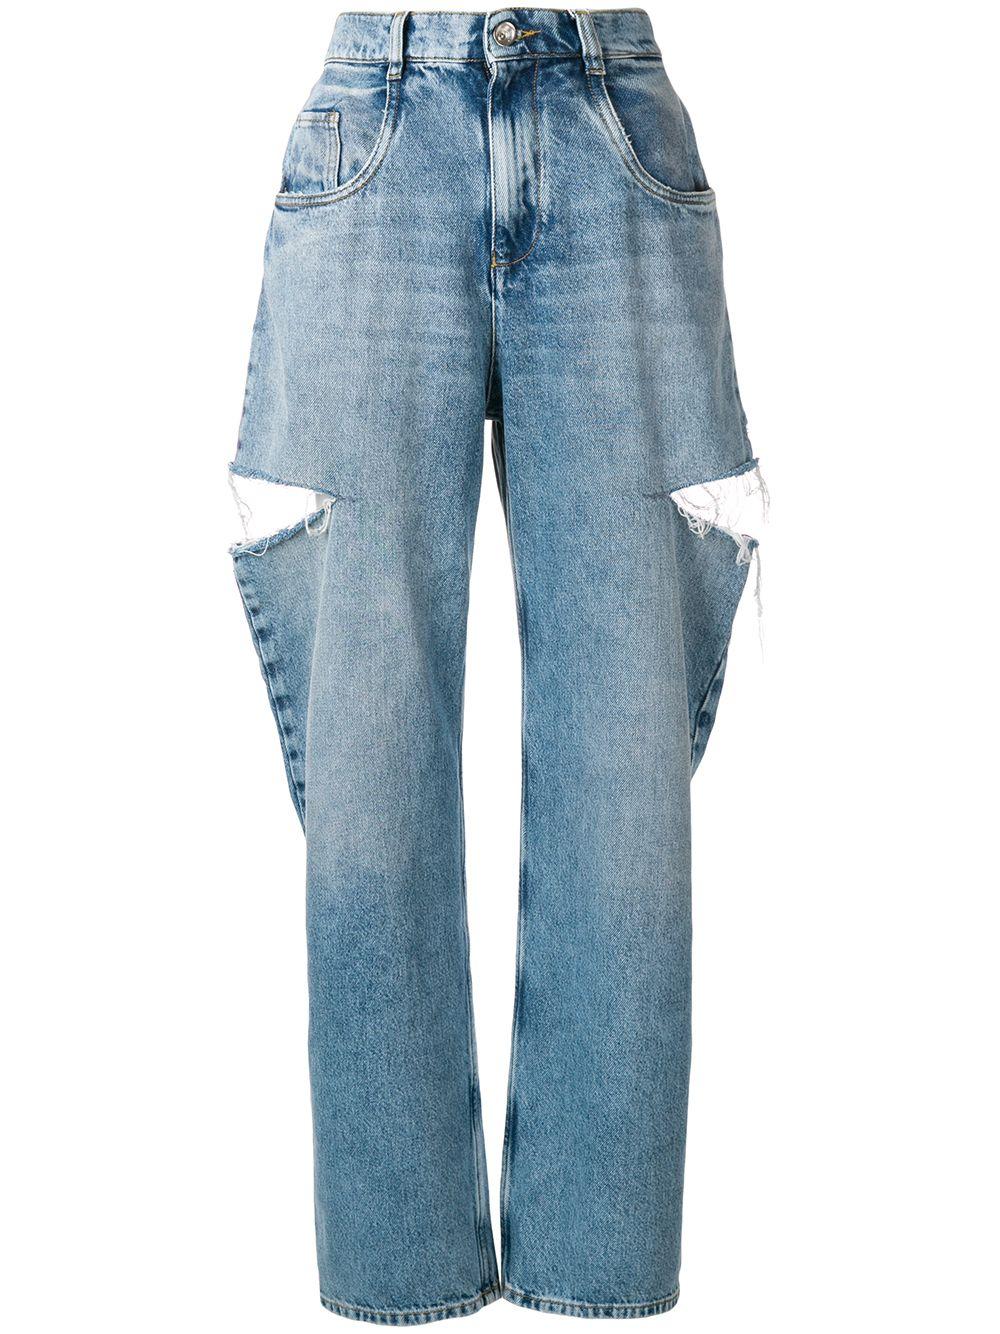 Maison Margiela Oversized Side Slit Jeans in Blue | Lyst